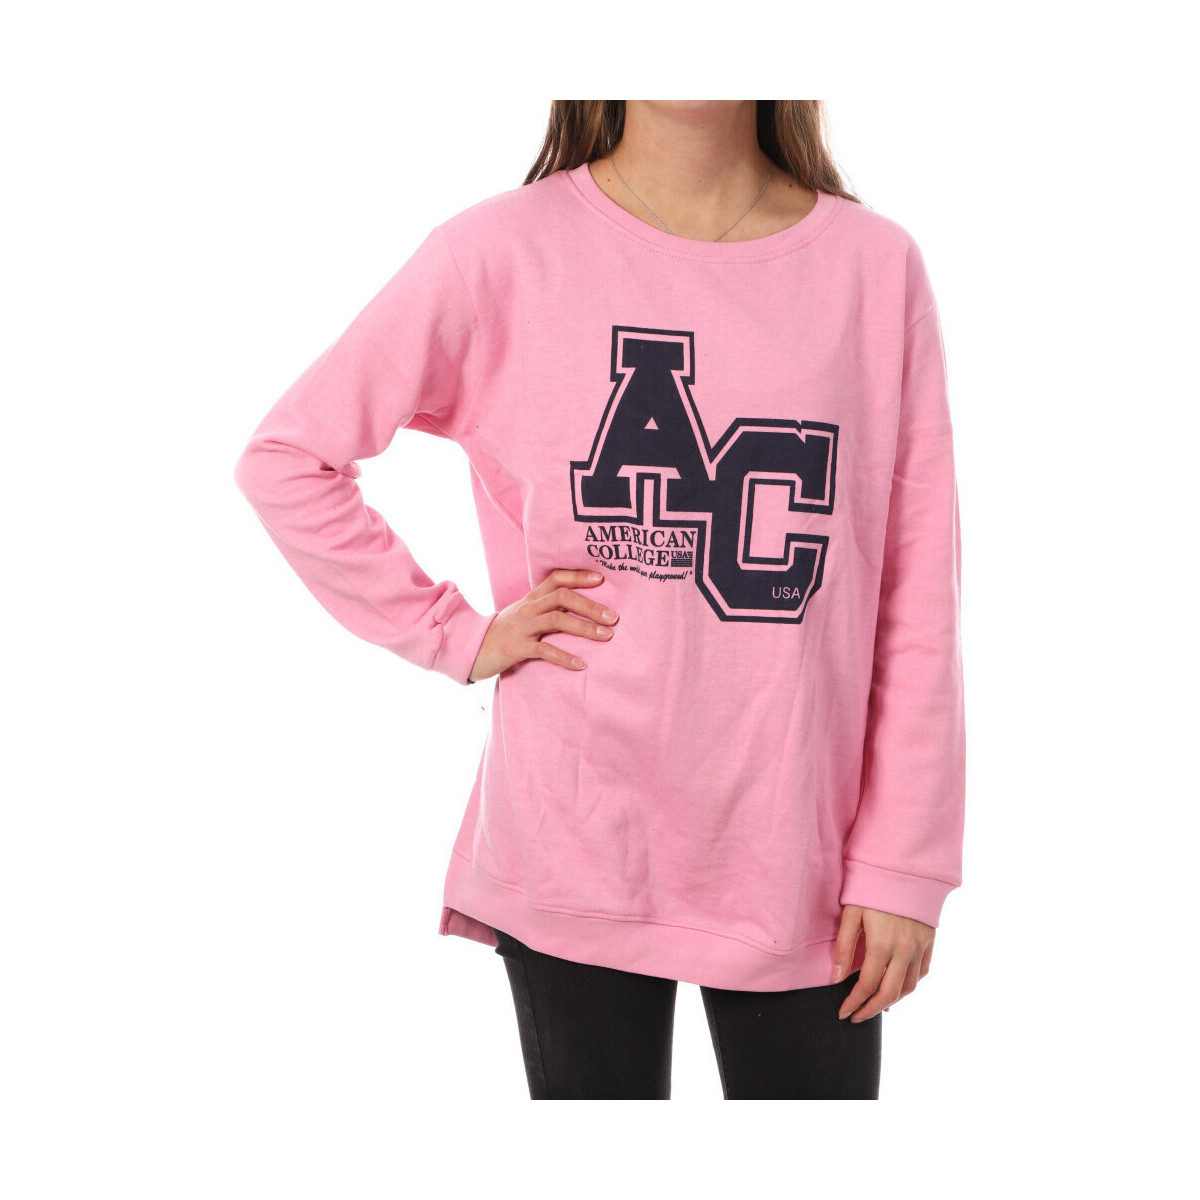 Kleidung Damen Sweatshirts American College YR656 Rosa